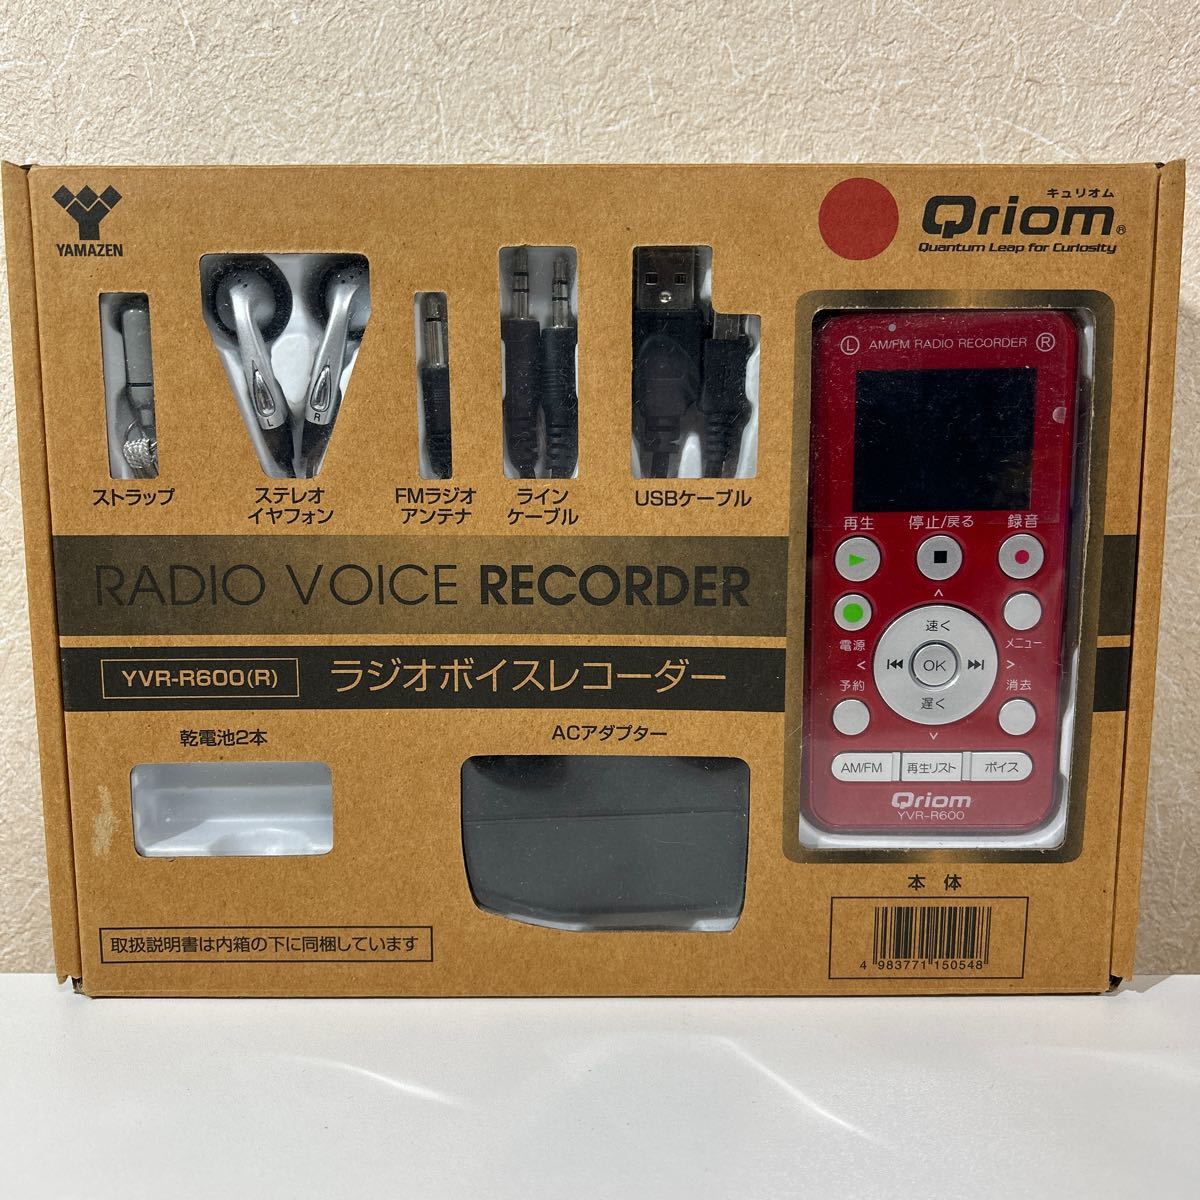 Qriom キュリオム ラジオボイスレコーダー YVR-R600(R) 赤 AM FM 付属品多数 ACアダプター 通電確認 乾電池欠品 元箱付 2017年 山善_画像1